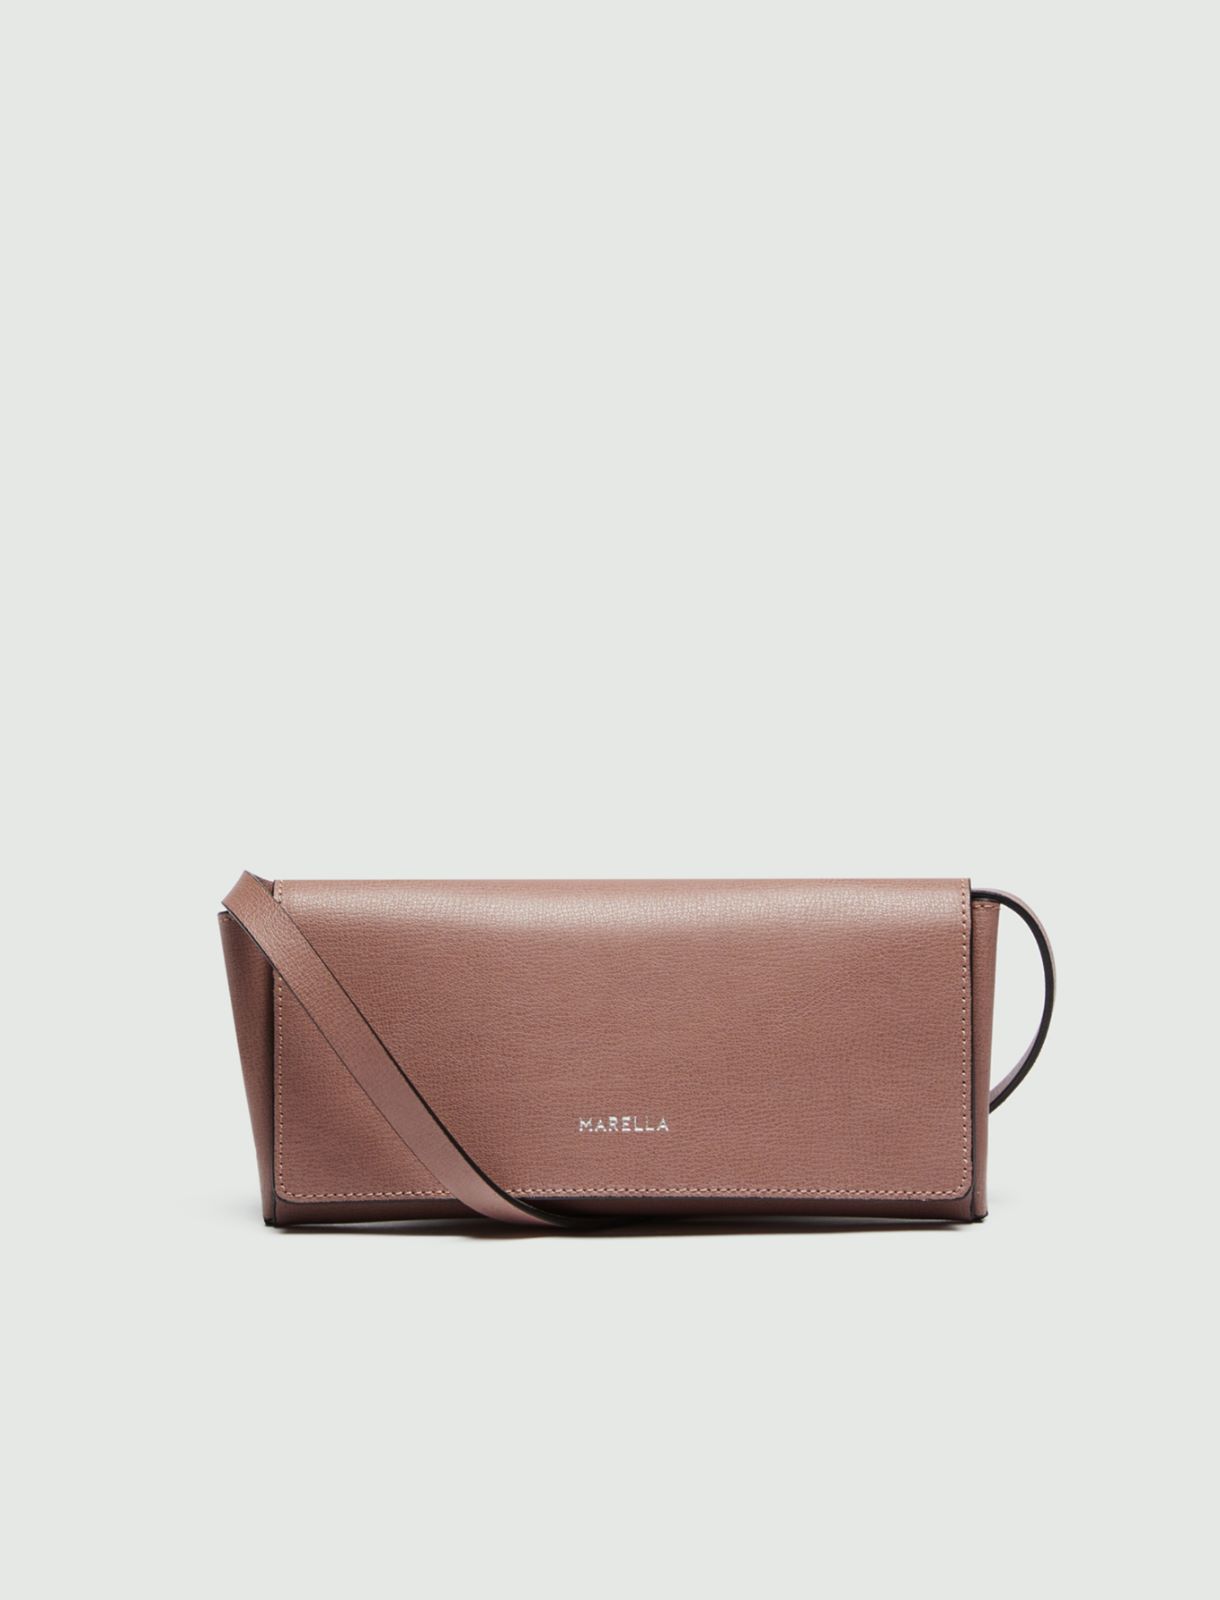 Portemonnaie-Tasche aus Leder  - Altrosa - Marella